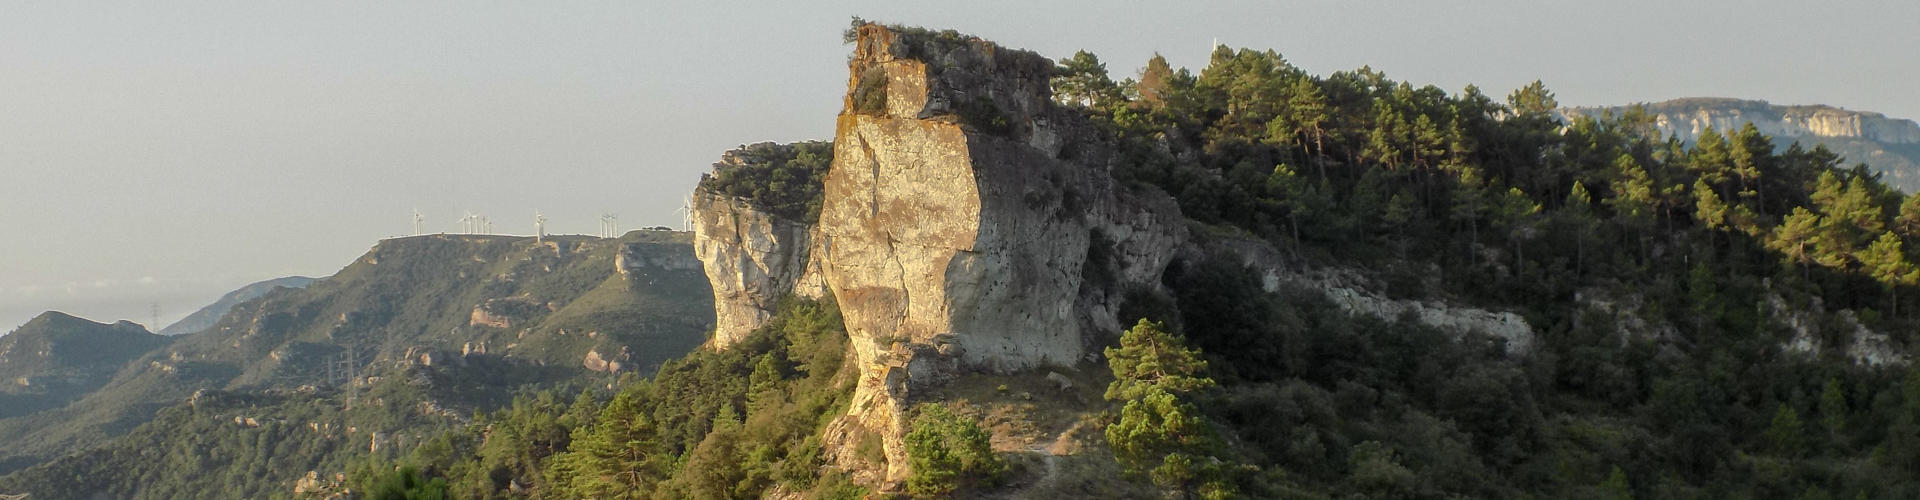 Formacions rocoses de la serra de Pradell